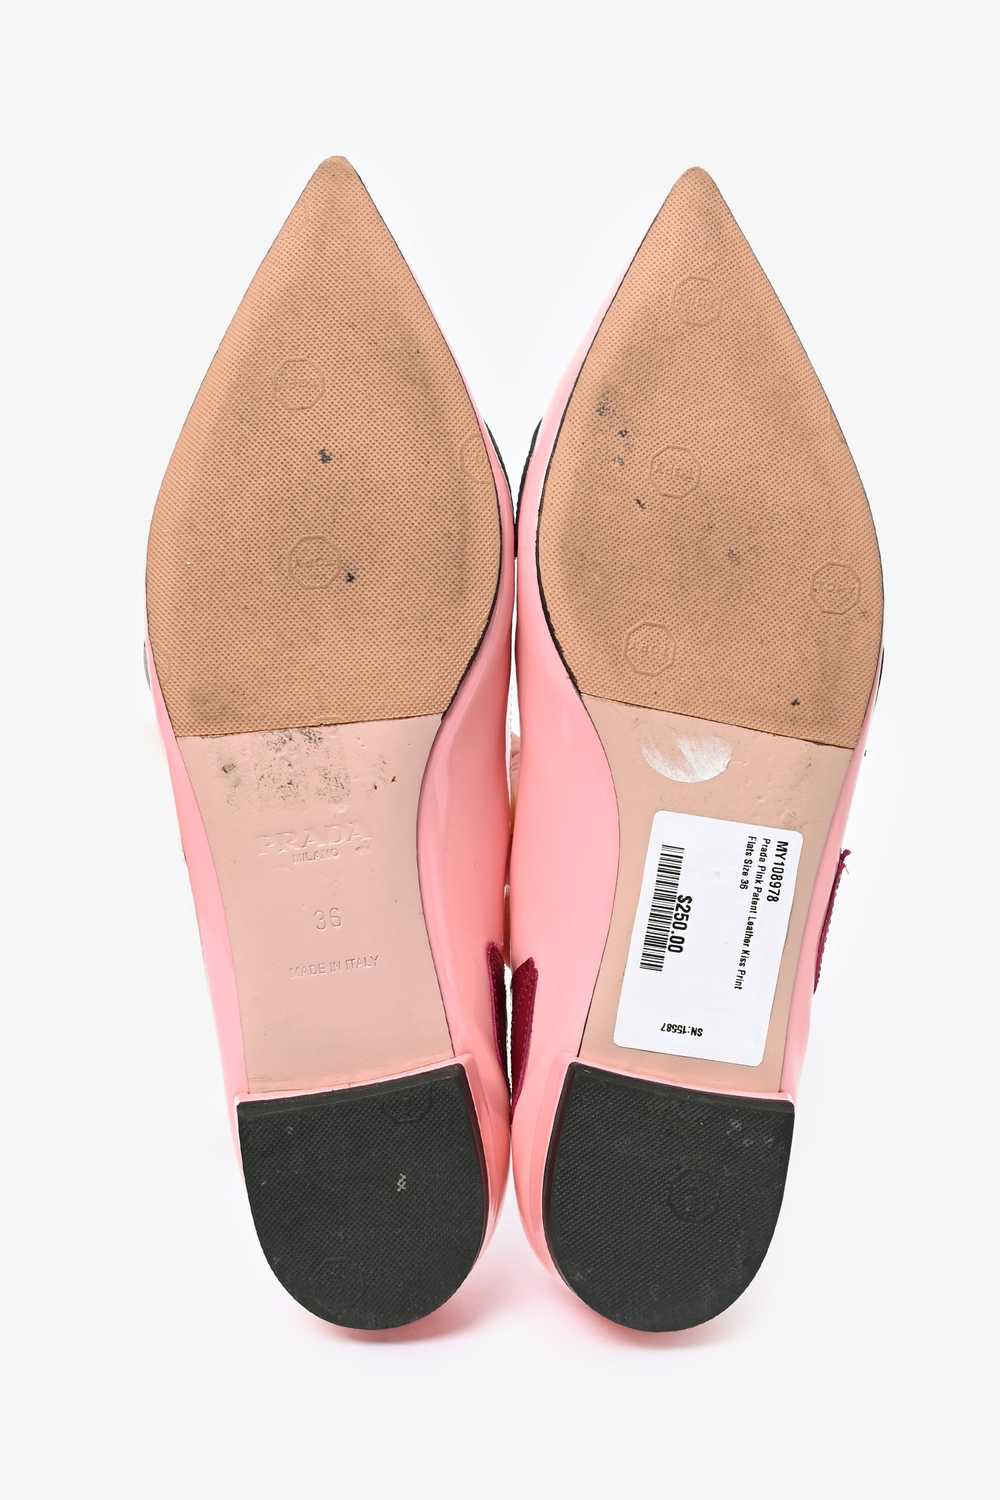 Prada Pink Patent Leather Kiss Print Flats Size 36 - image 7